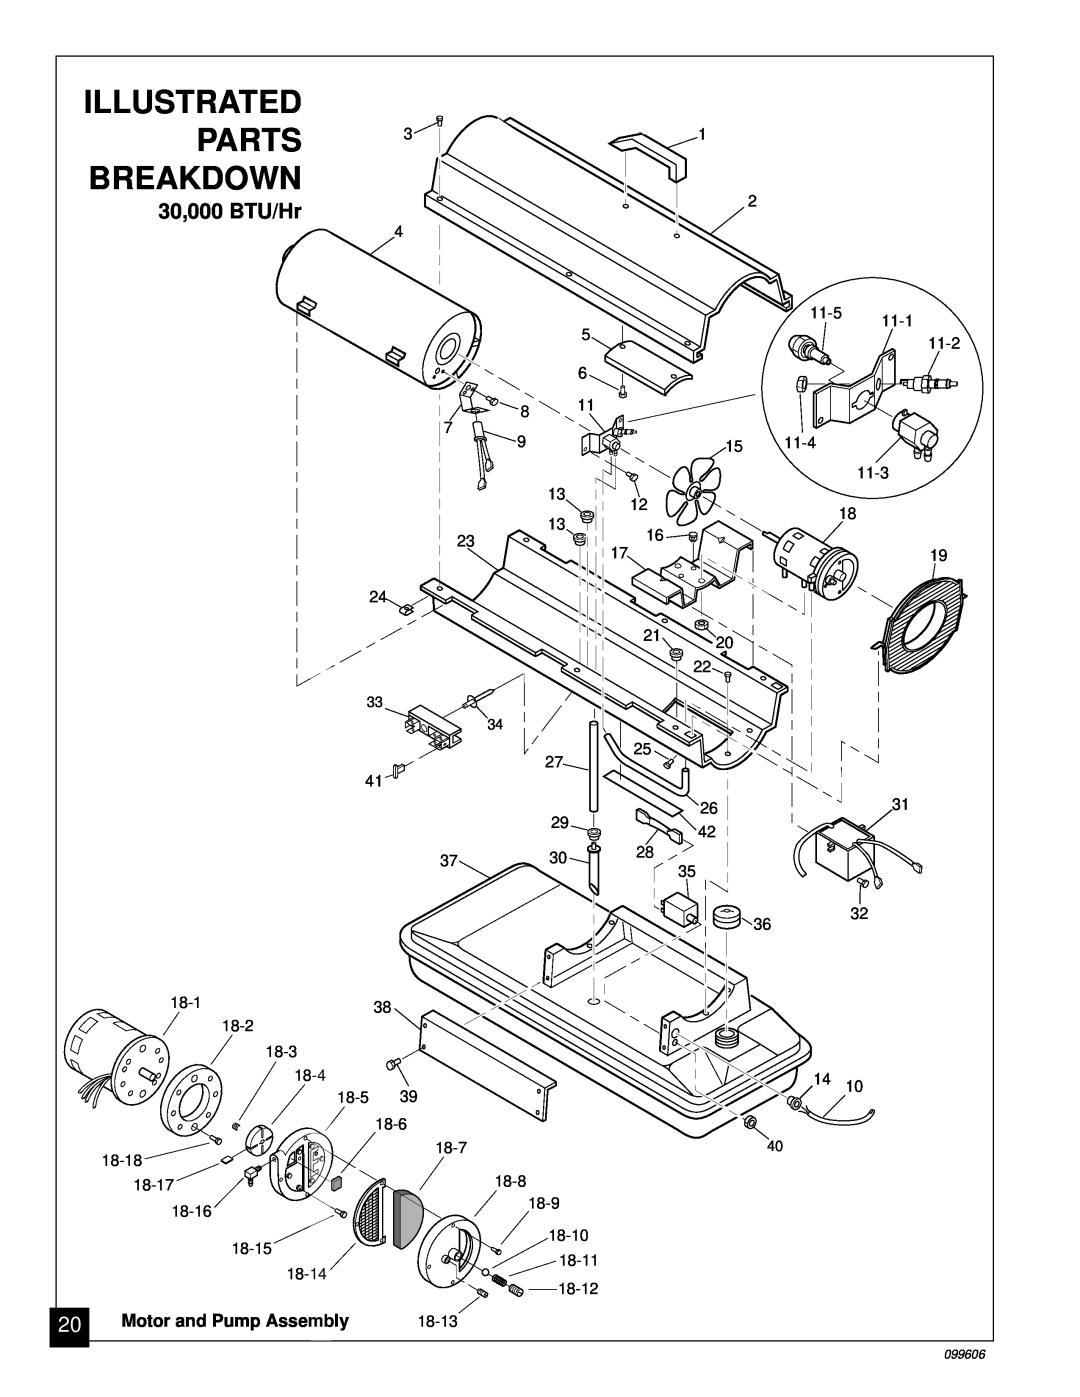 Desa 70, 90 owner manual Parts, Breakdown, Illustrated, 30,000 BTU/Hr, Motor and Pump Assembly 